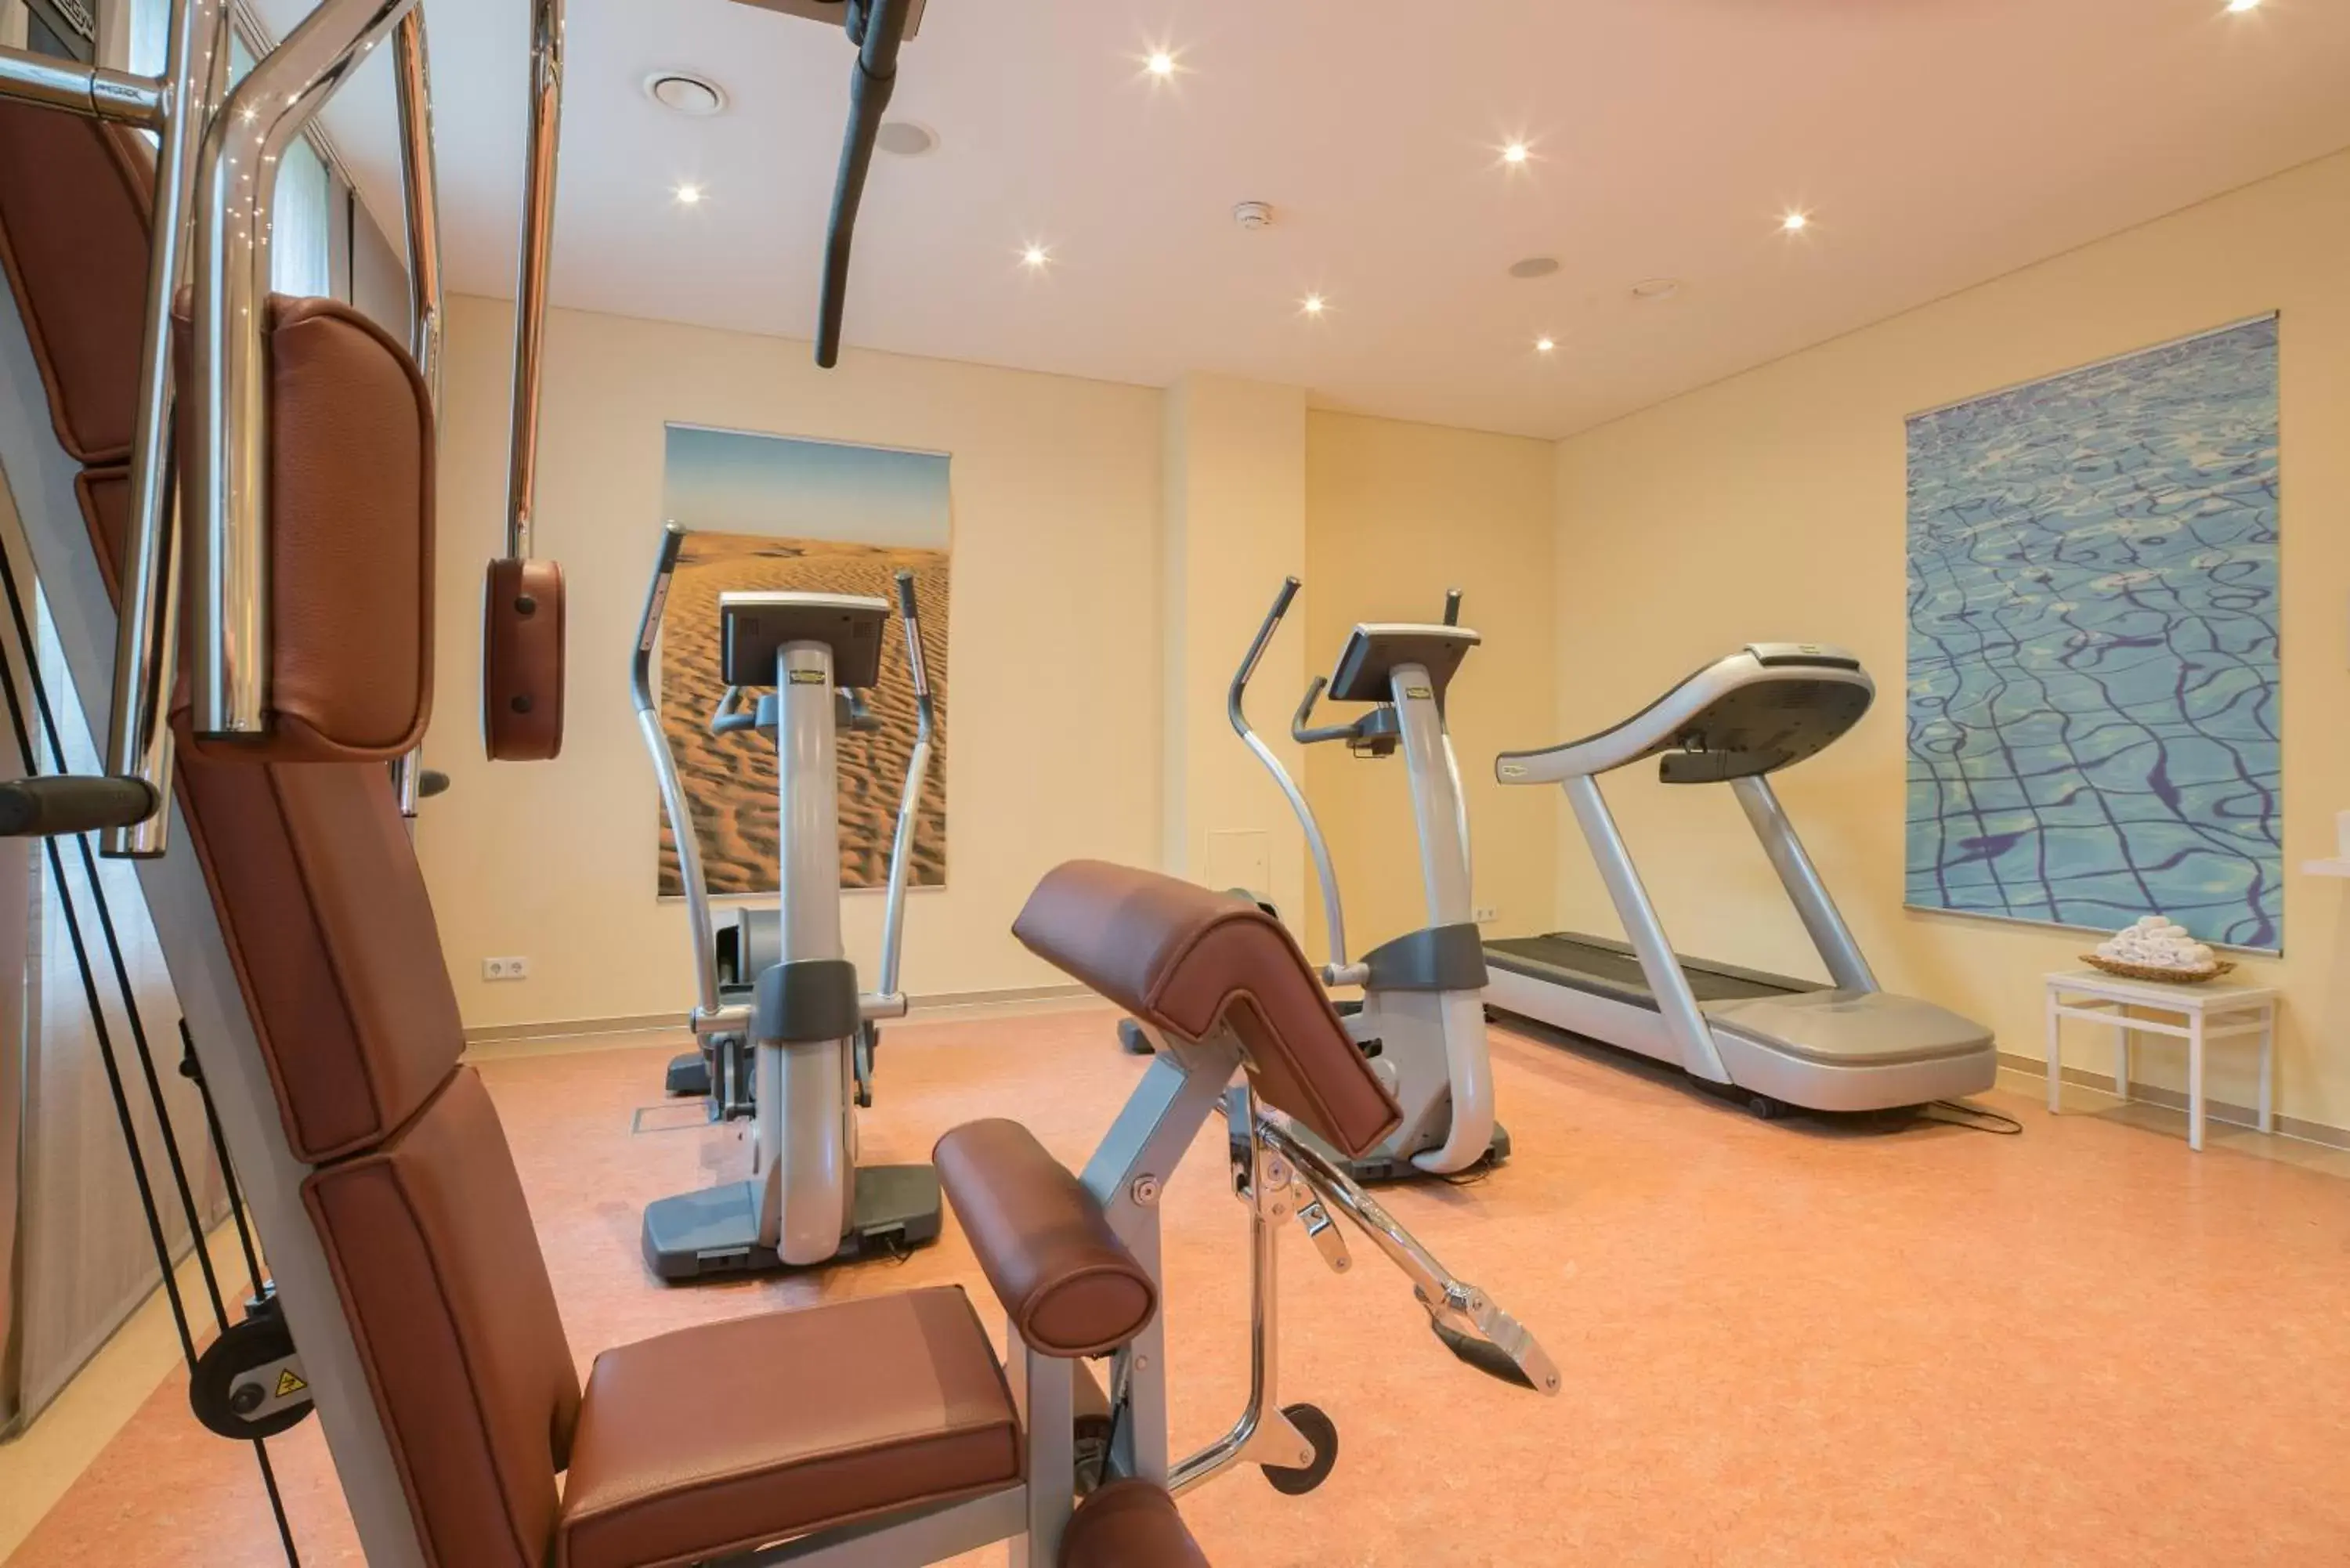 Fitness centre/facilities, Fitness Center/Facilities in Best Western Premier Castanea Resort Hotel